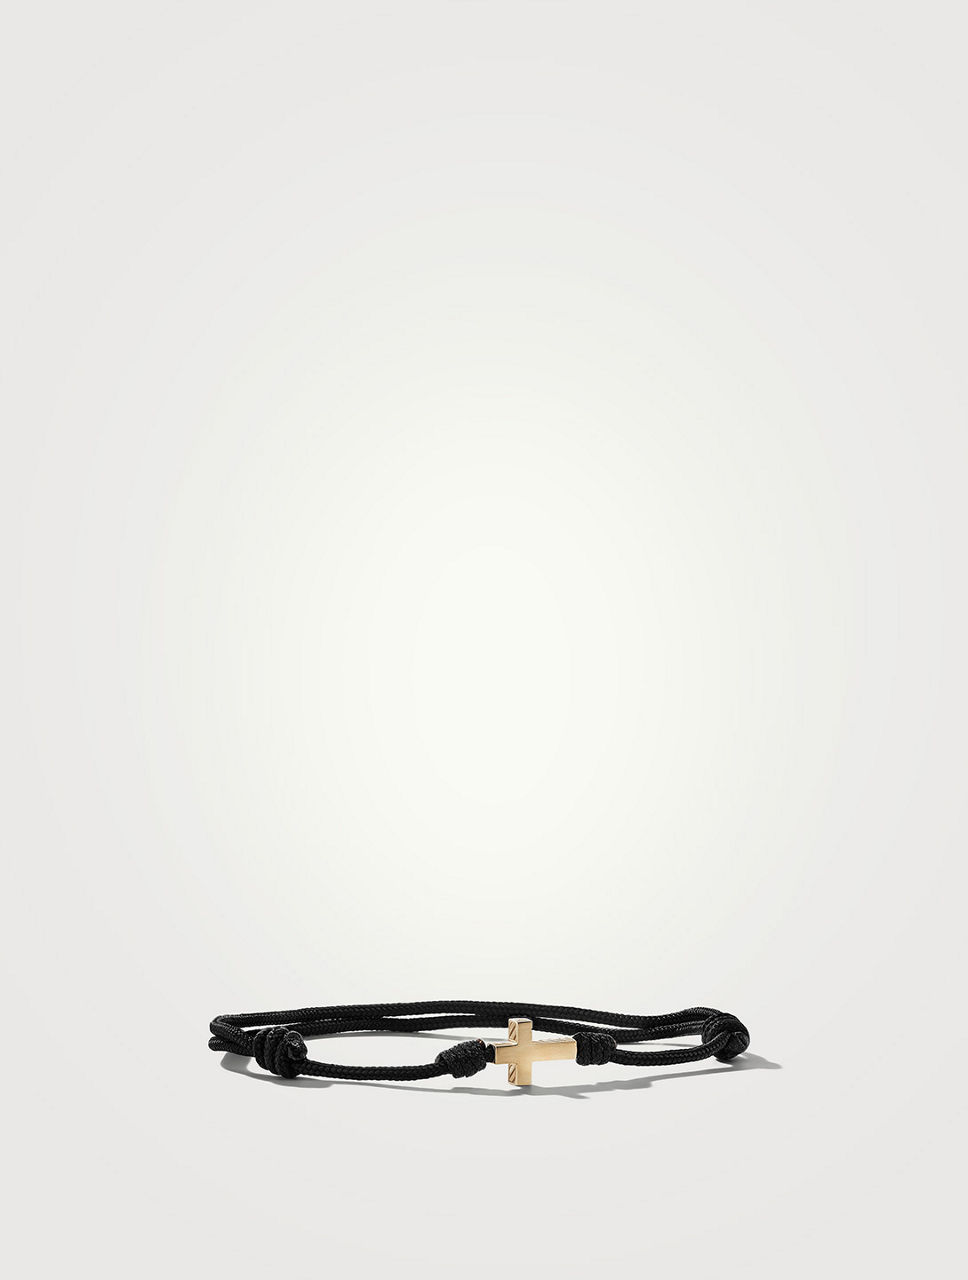 DAVID YURMAN Cross Black Cord Bracelet With 18k Yellow Gold